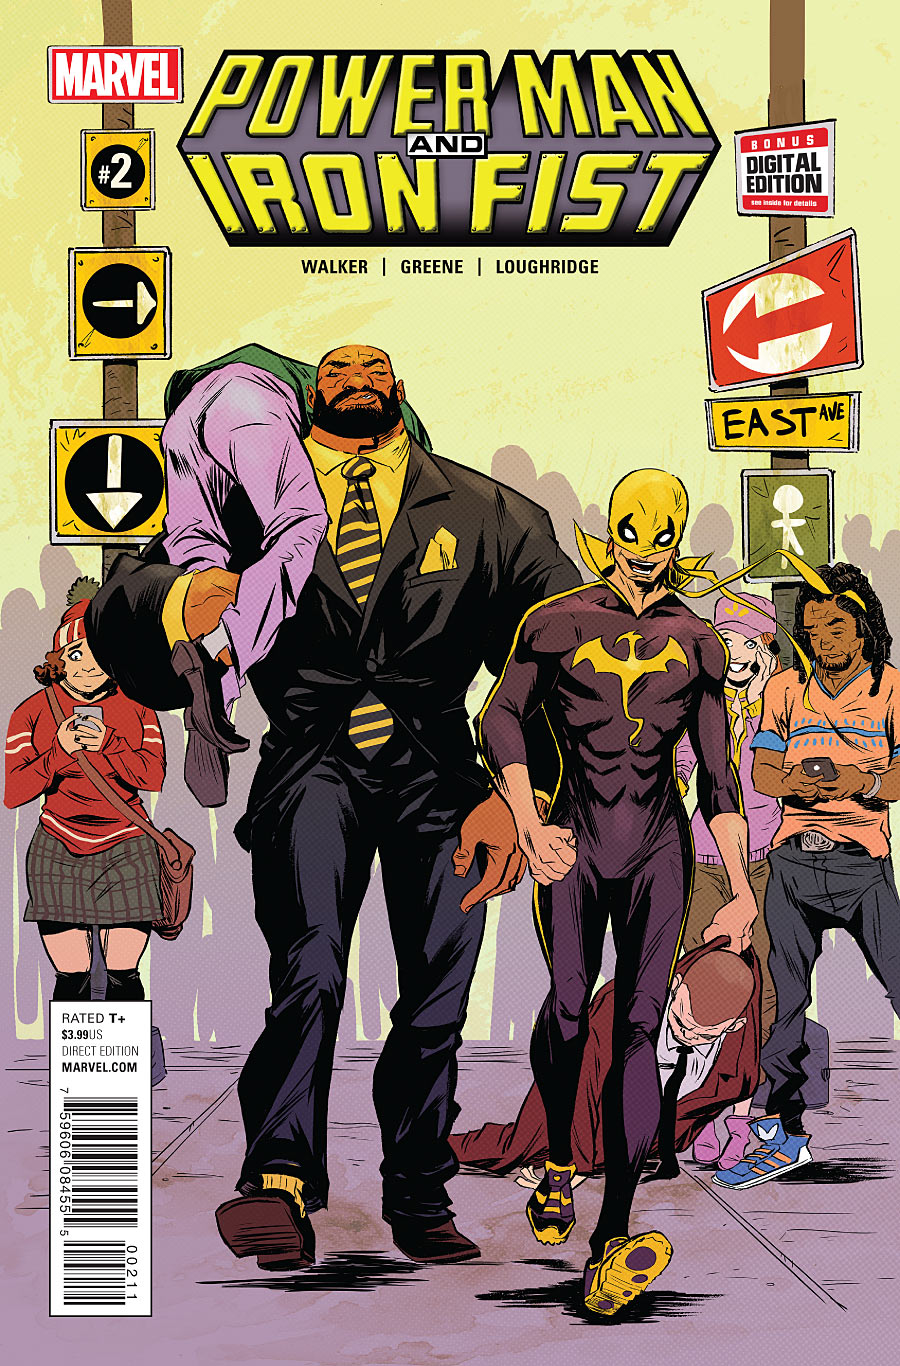 Iron Fist # 2 Marvel Comics Vol. 3 –